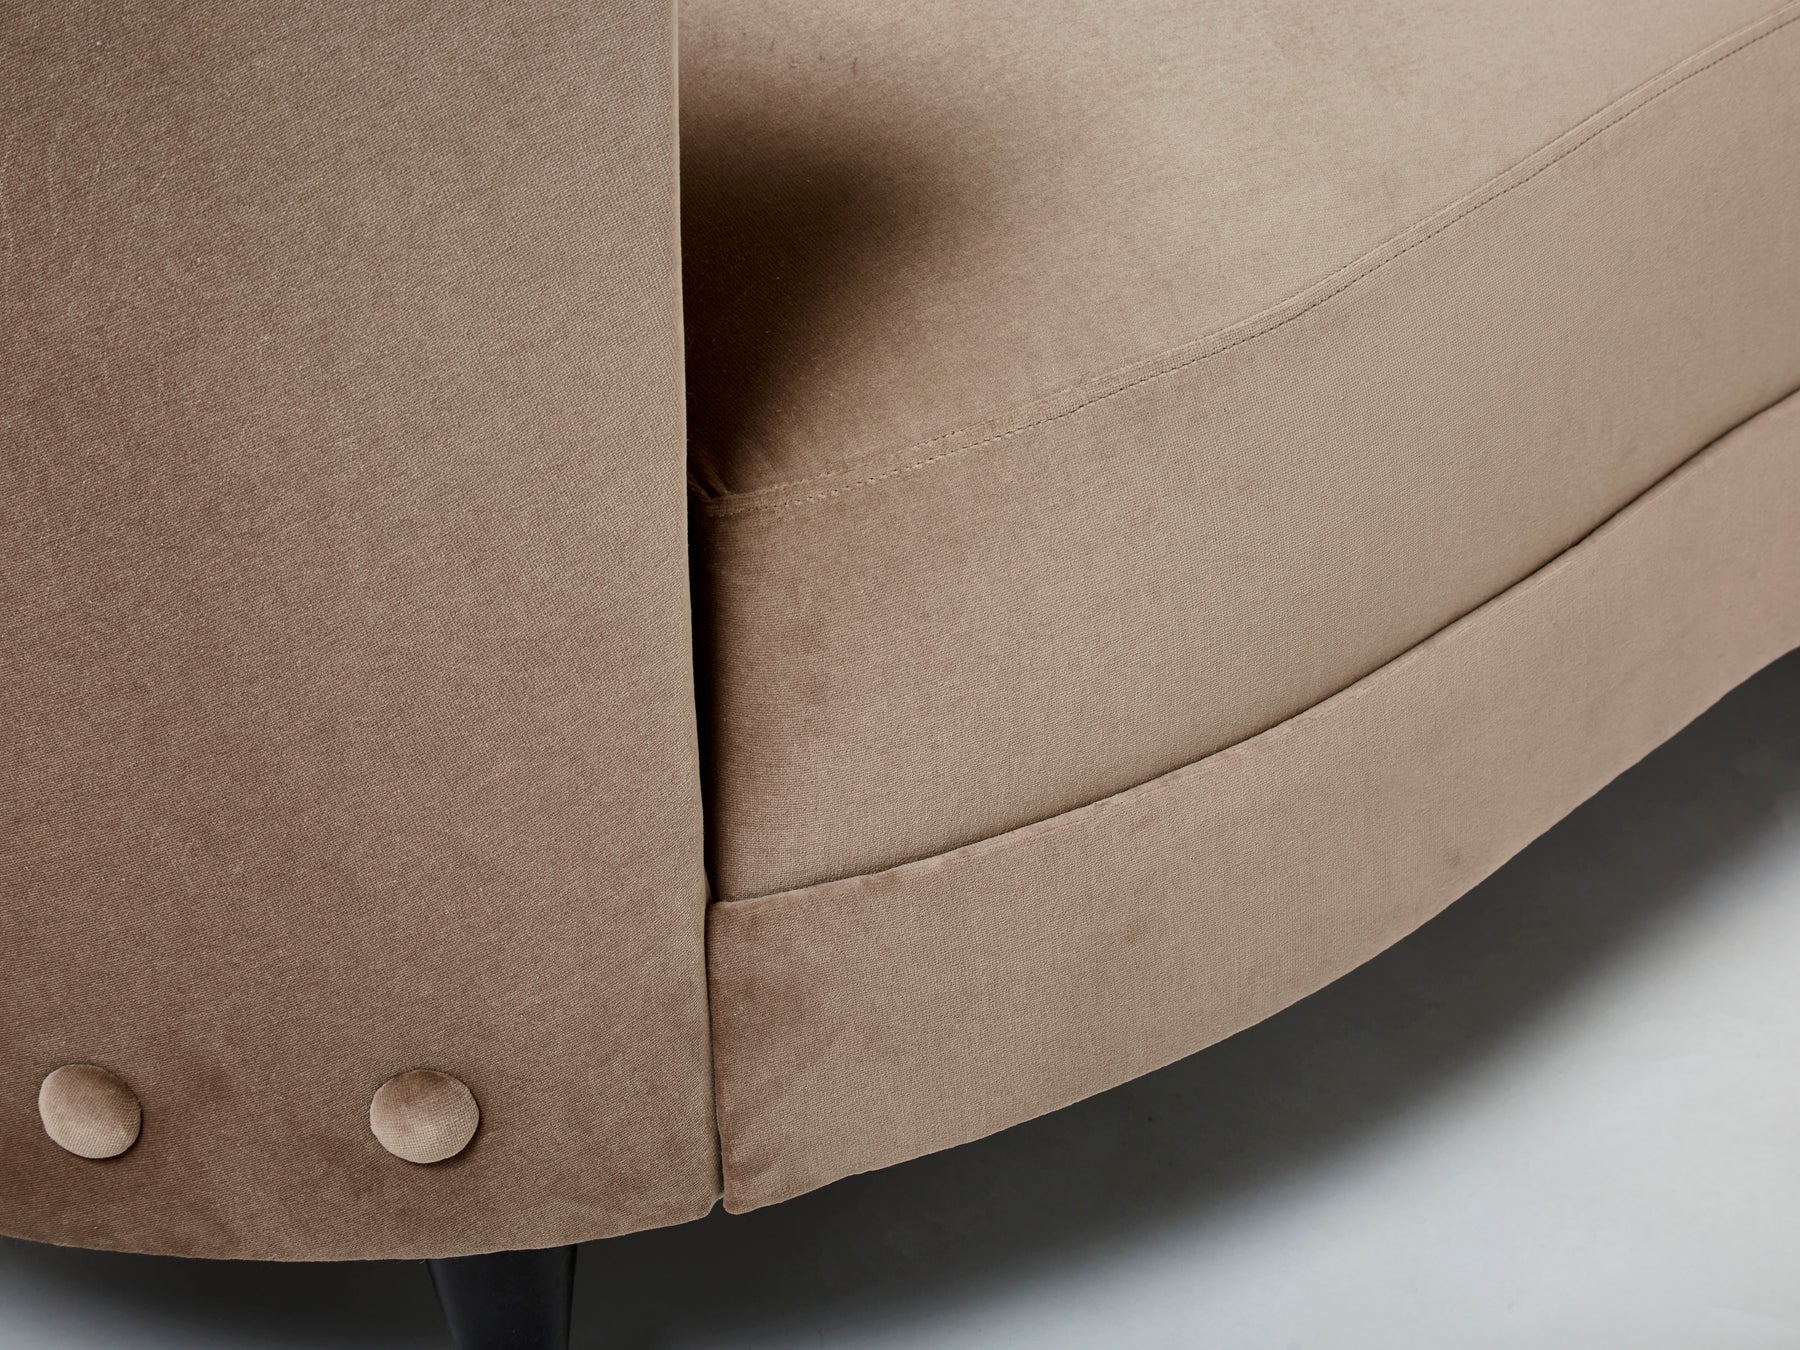 Federico Munari velvet rounded meridienne sofa 1960s